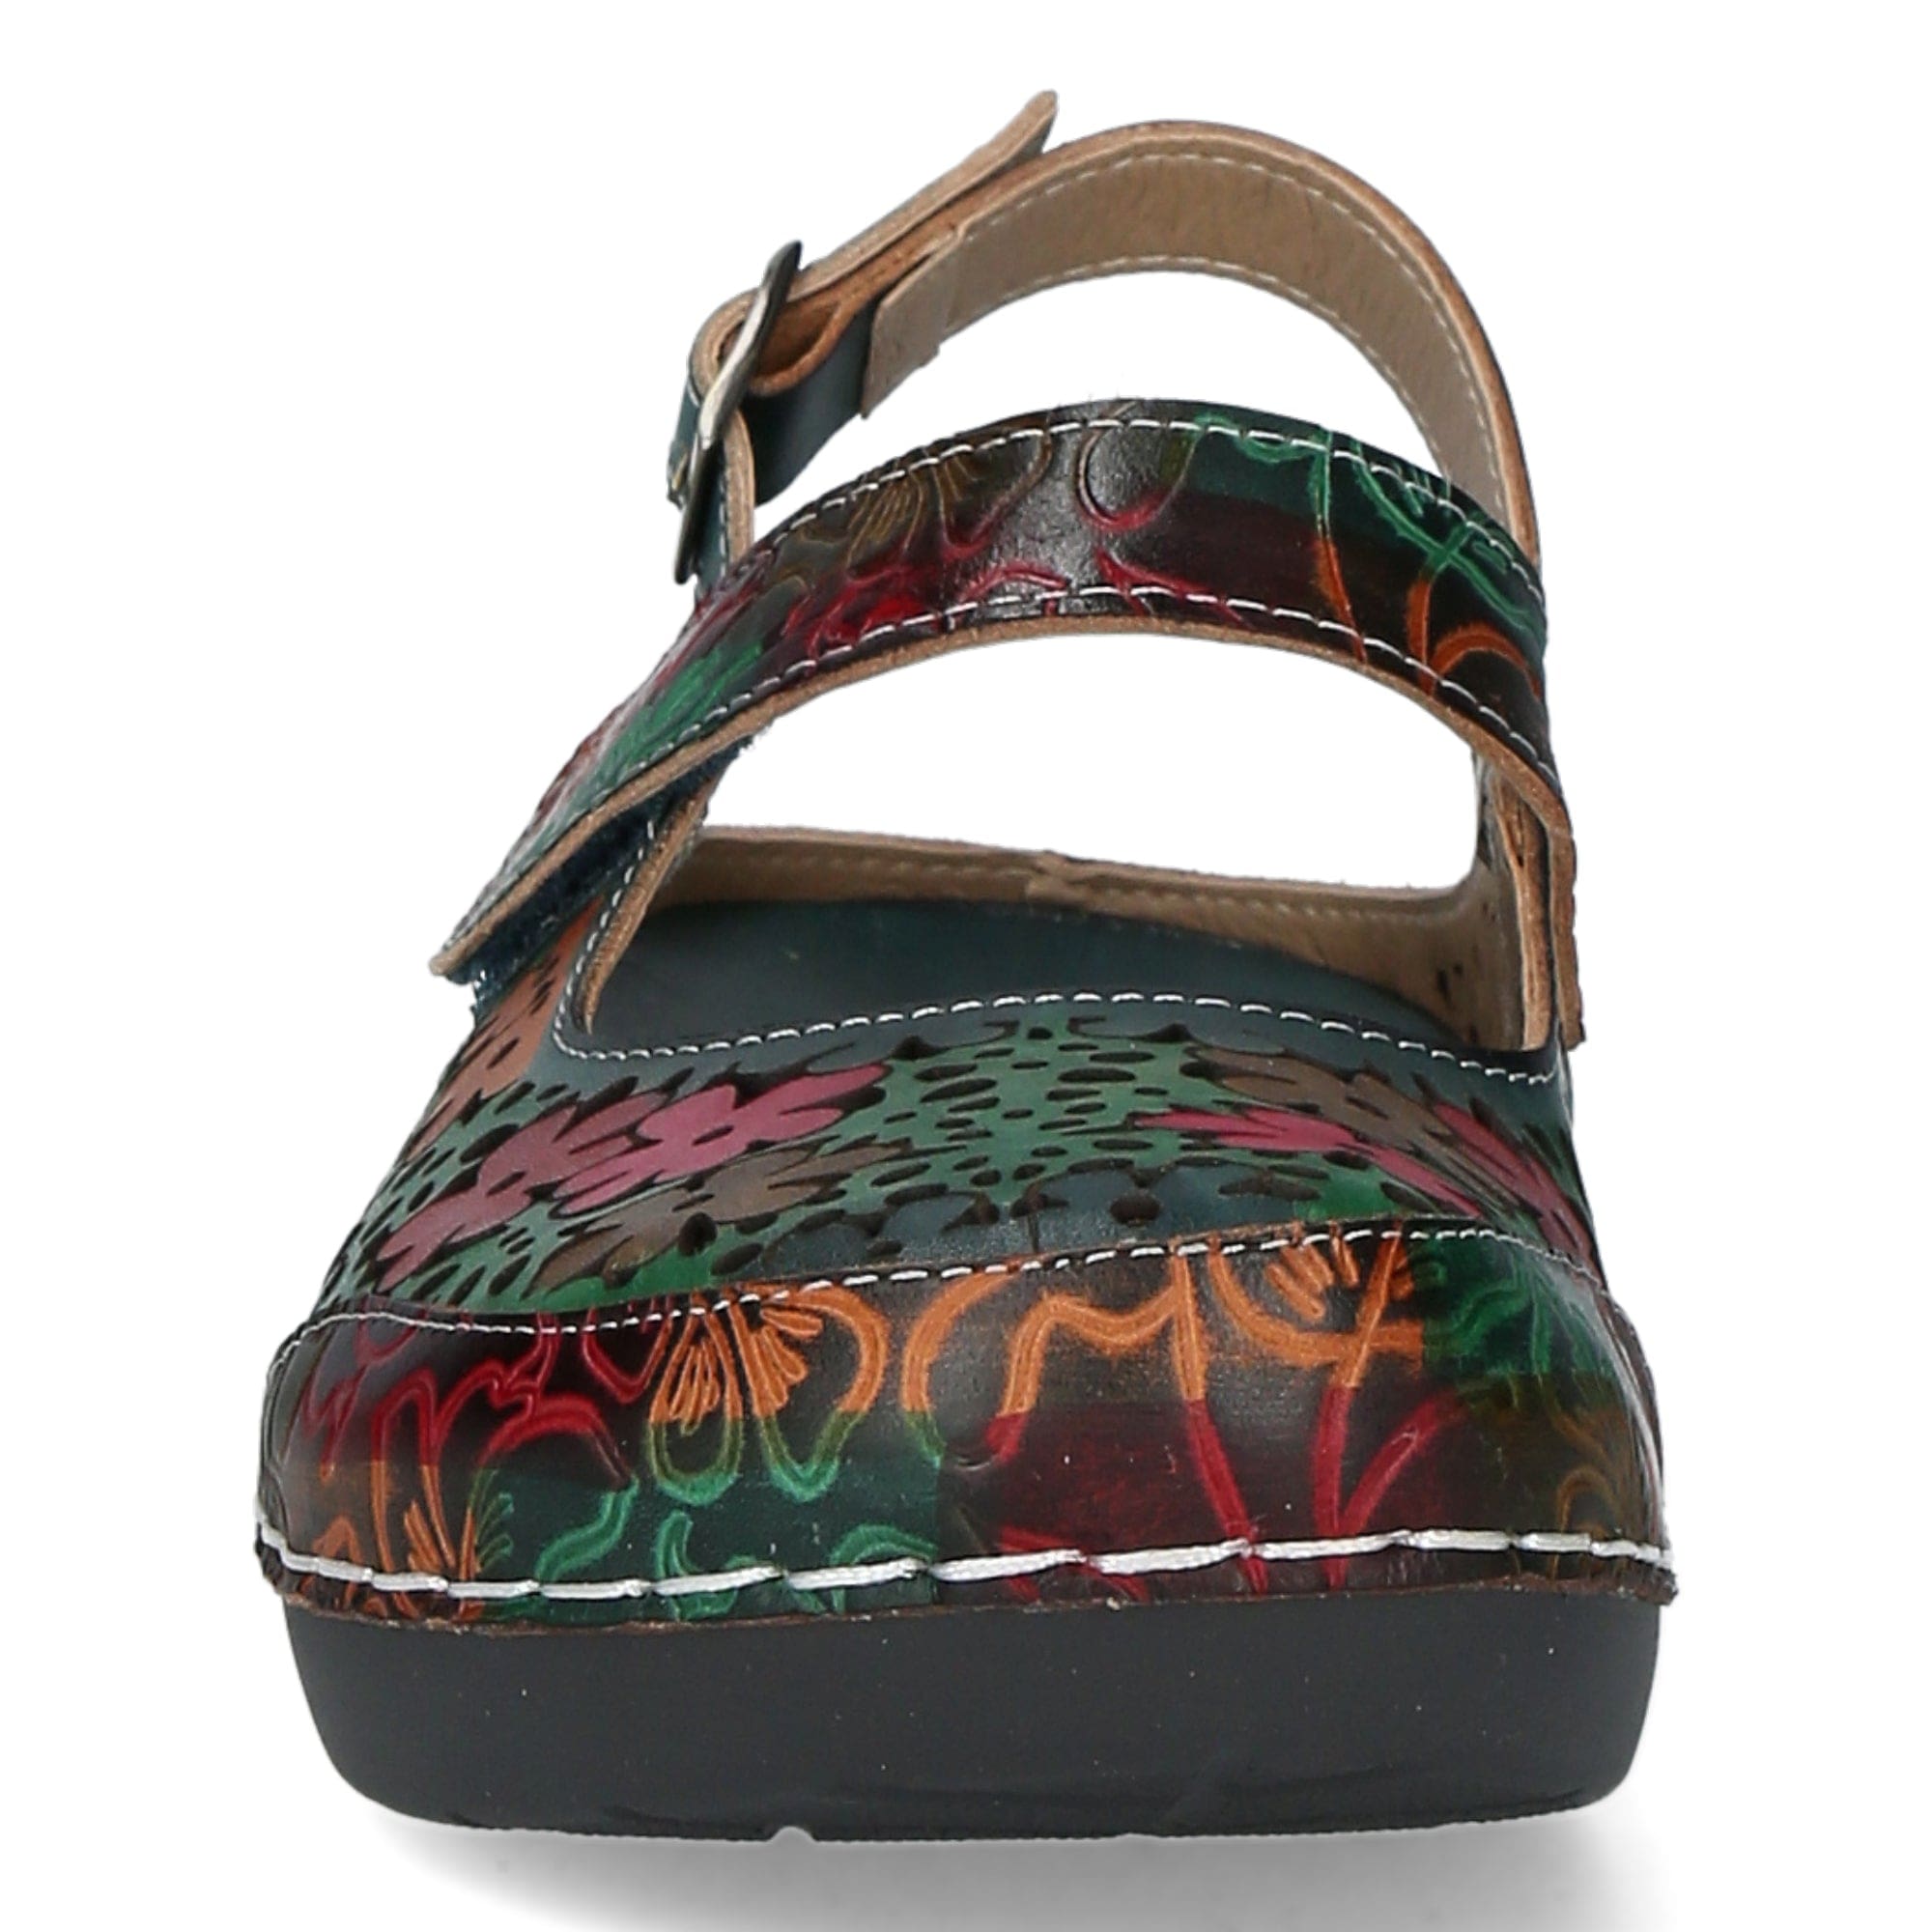 Chaussure BICLLYO01 - Sandale